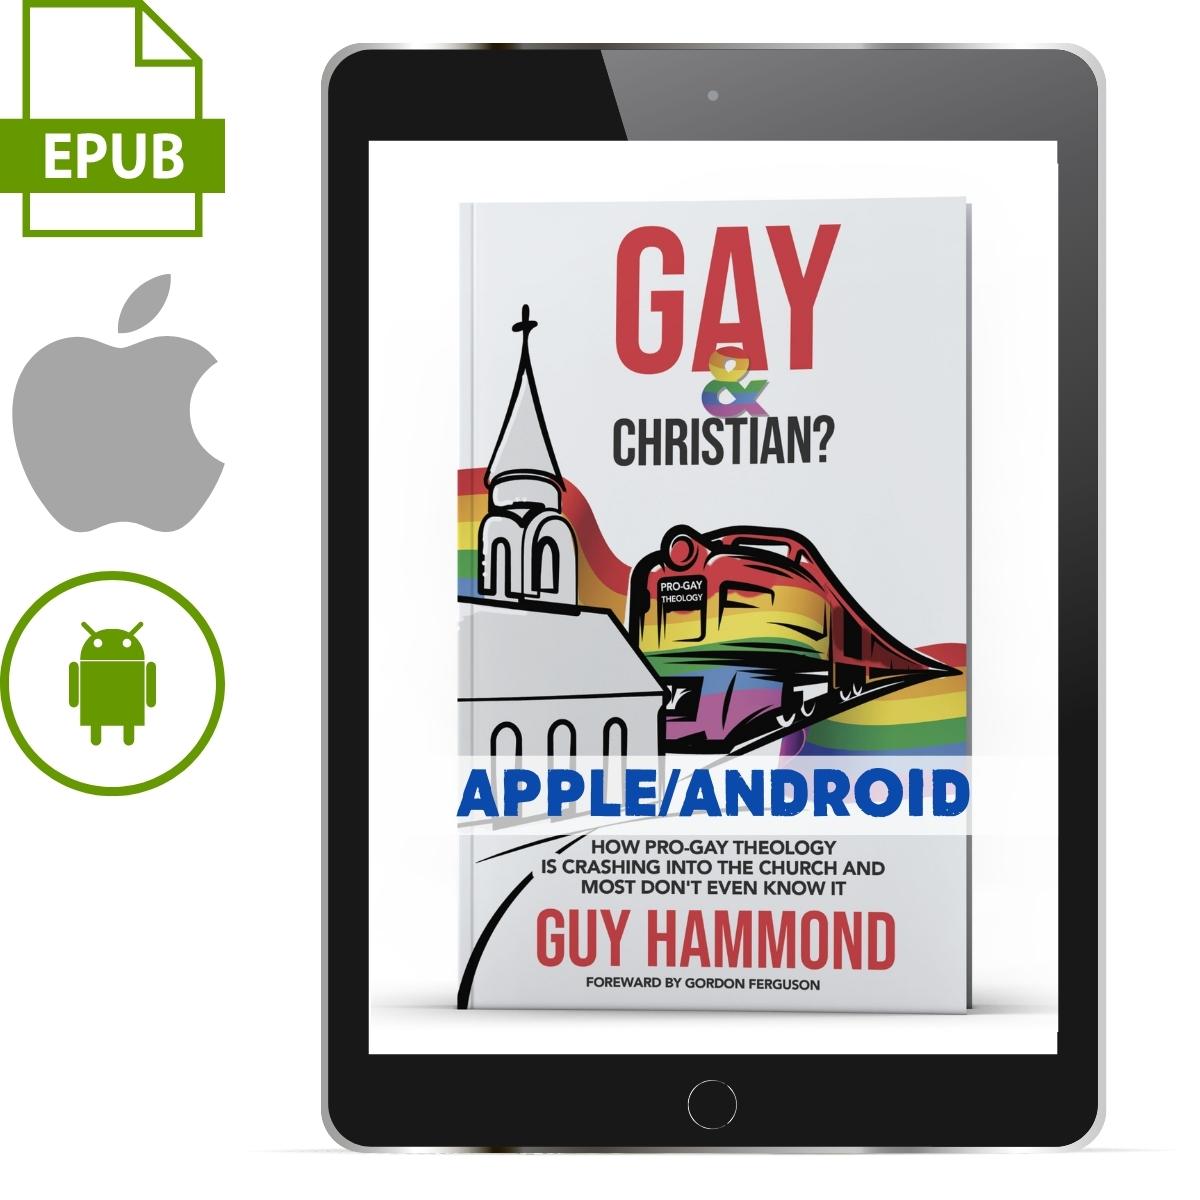 Gay & Christian? Apple/Android - Illumination Publishers